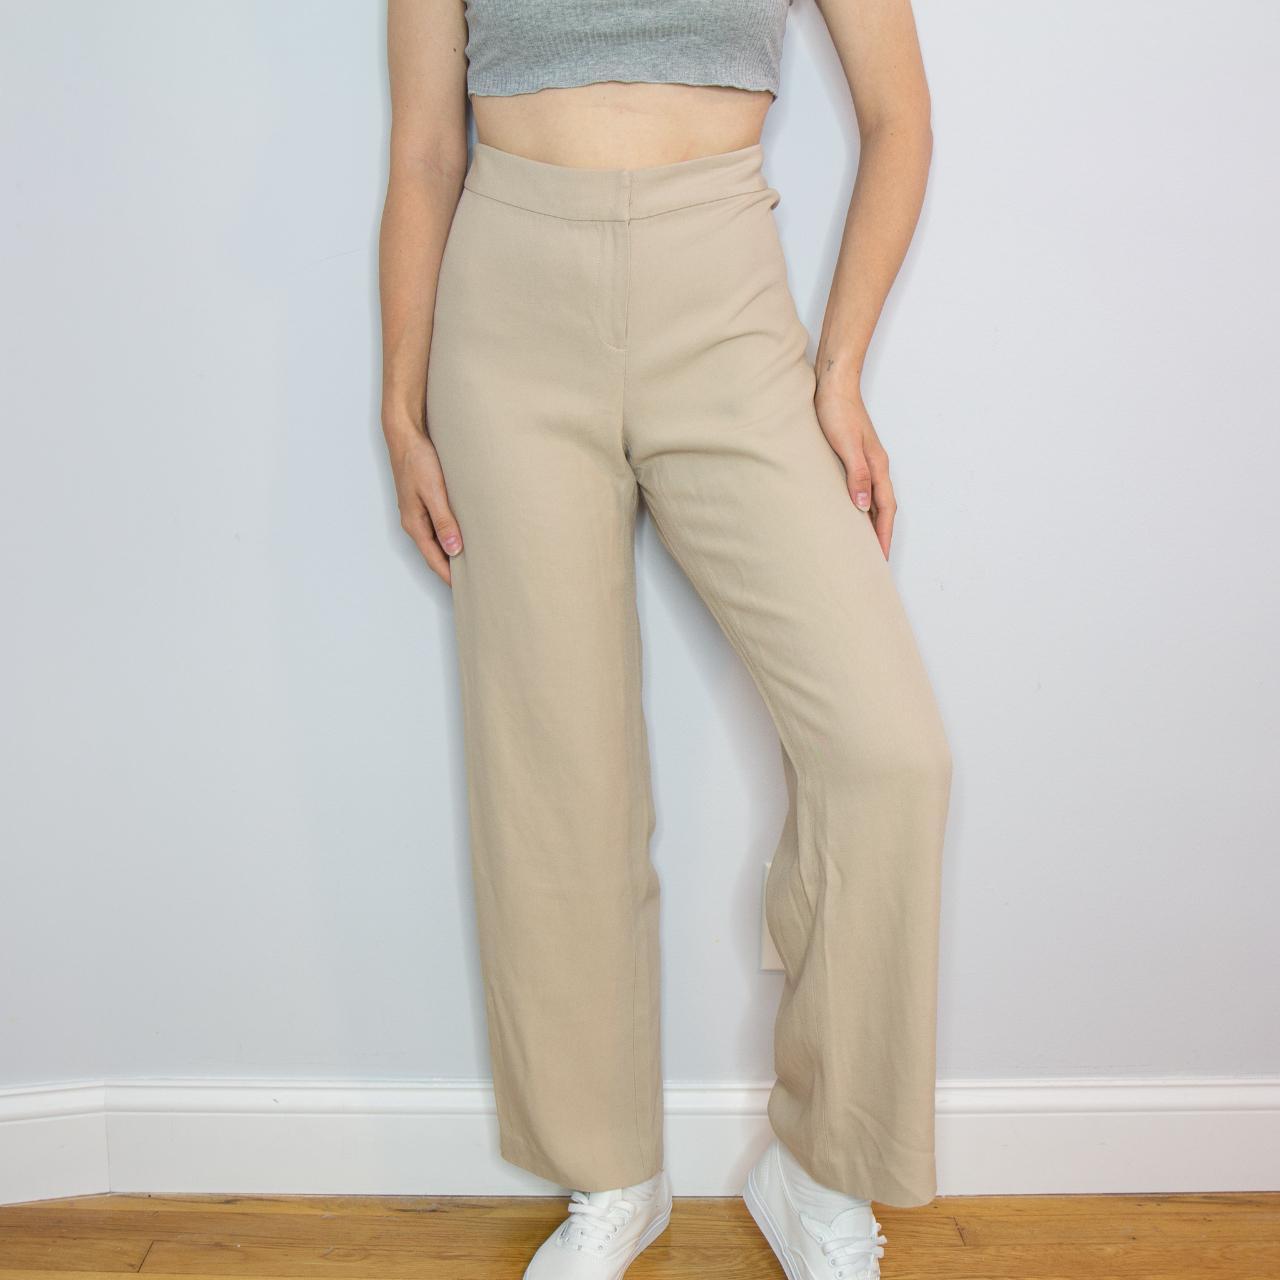 Product Image 1 - beige wide leg dress pants

FREE